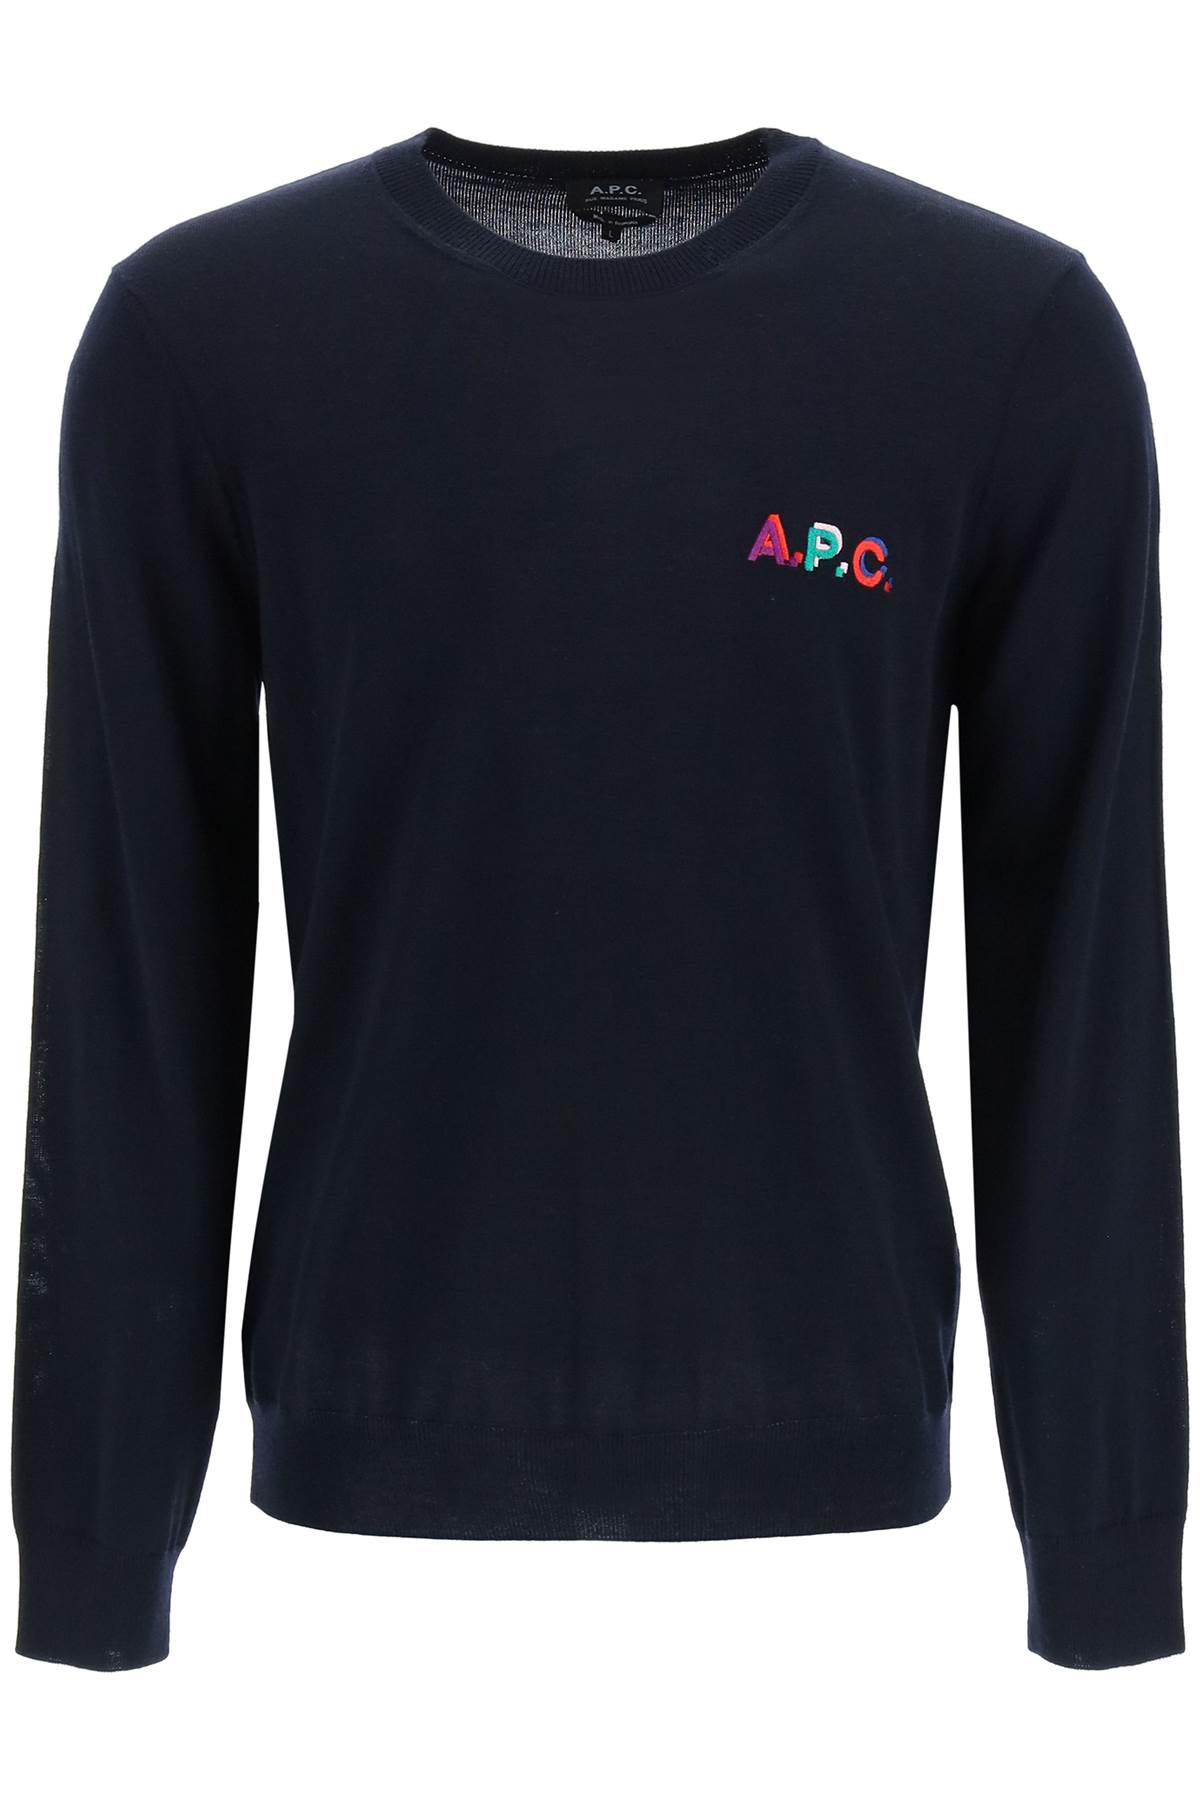 A.P.C. brian Crew-neck Sweater